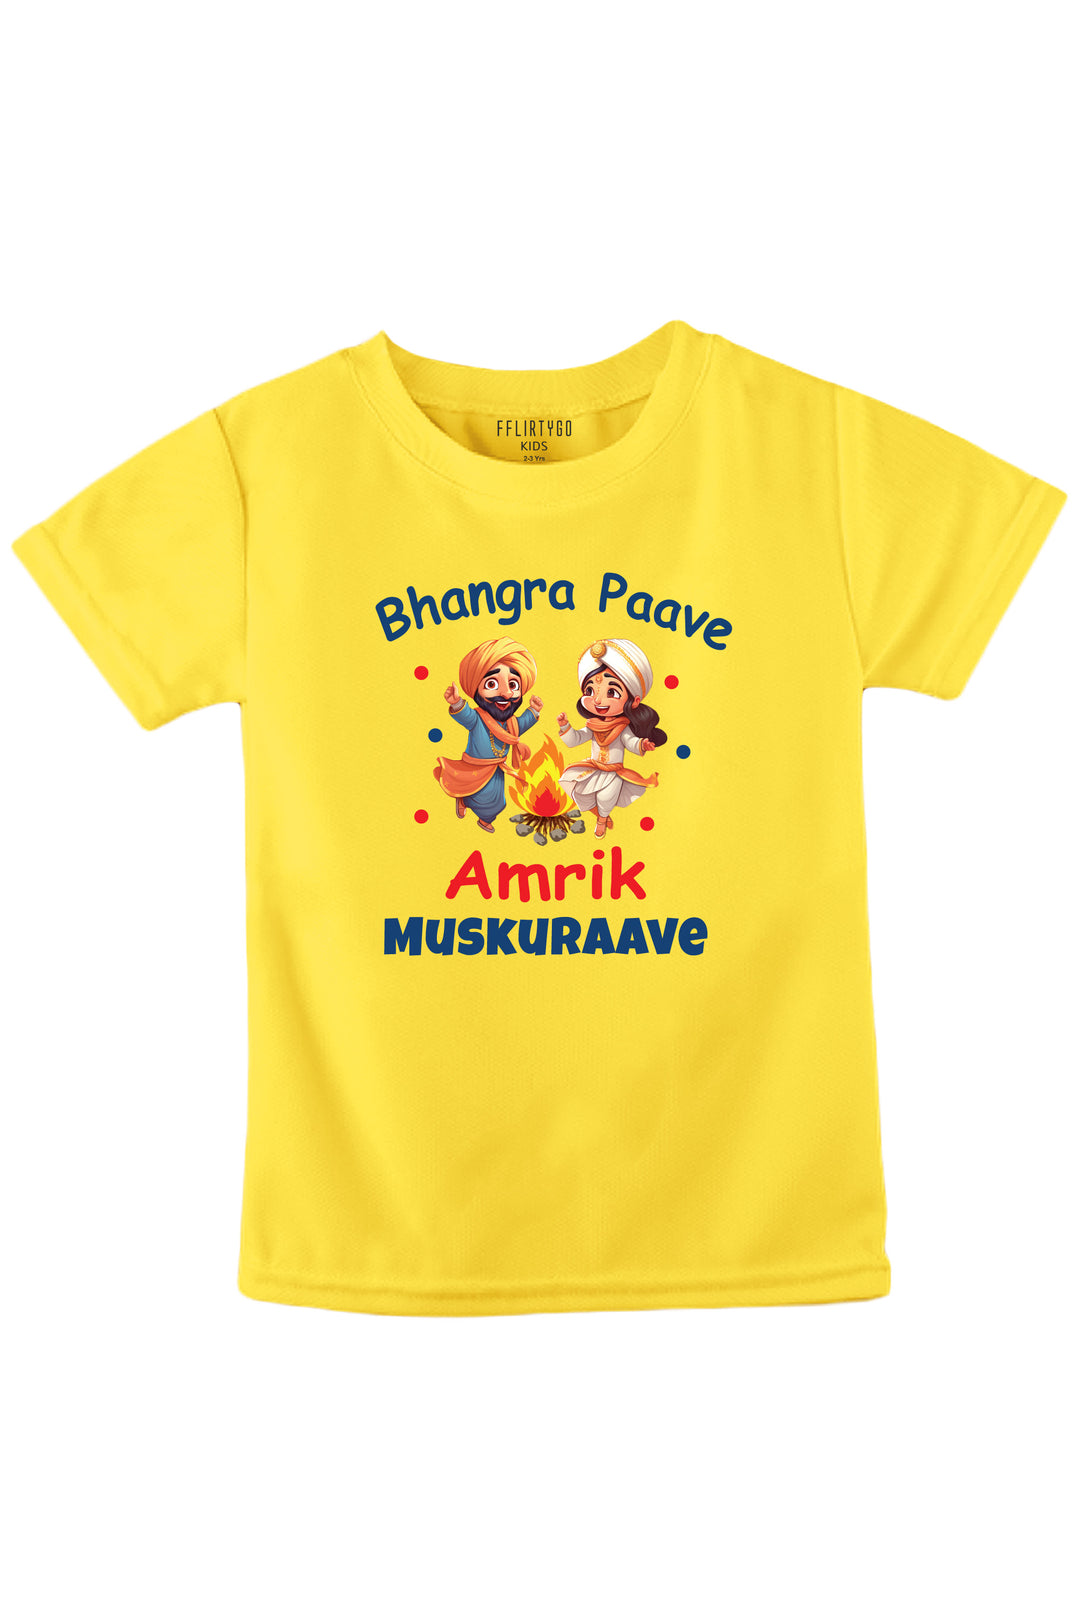 Bhangra Paave - Muskuraave Kids T Shirt w/ Custom Name